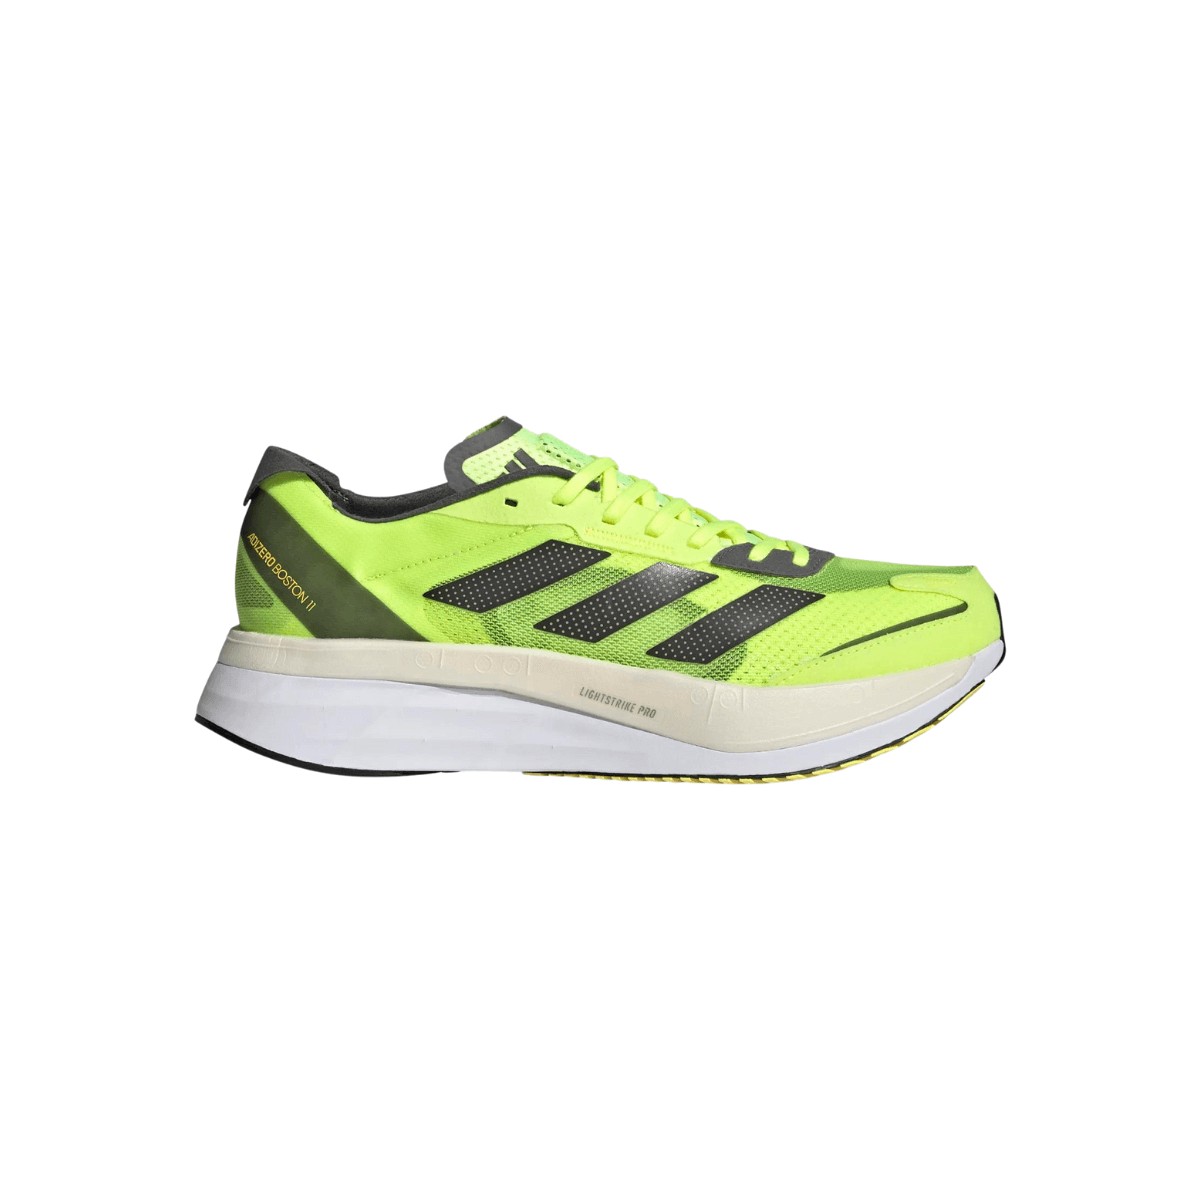 Adidas Adizero Boston 11 Shoes Green Fluor AW22, Size UK 8